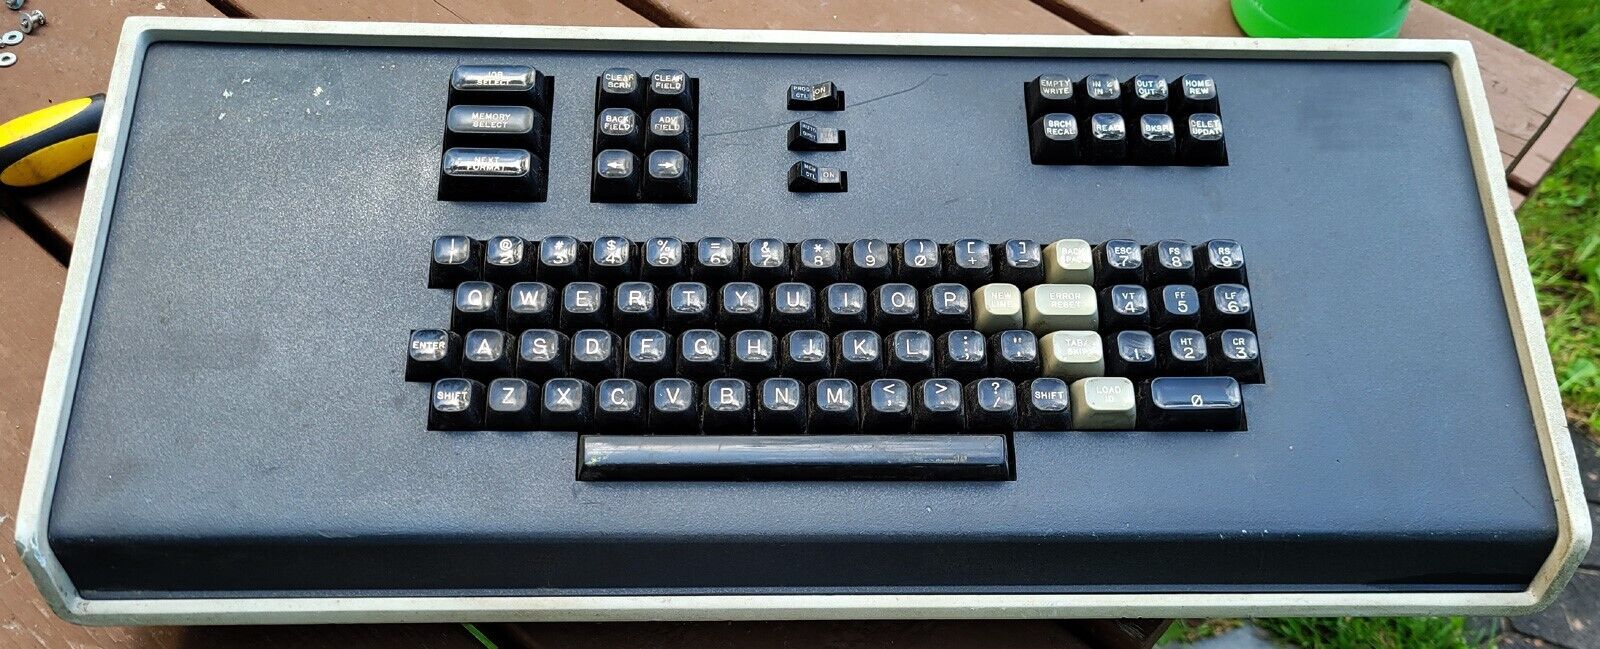 Vintage Rare Keytronic Computer Keyboard from 1976 - Sycor inc Board